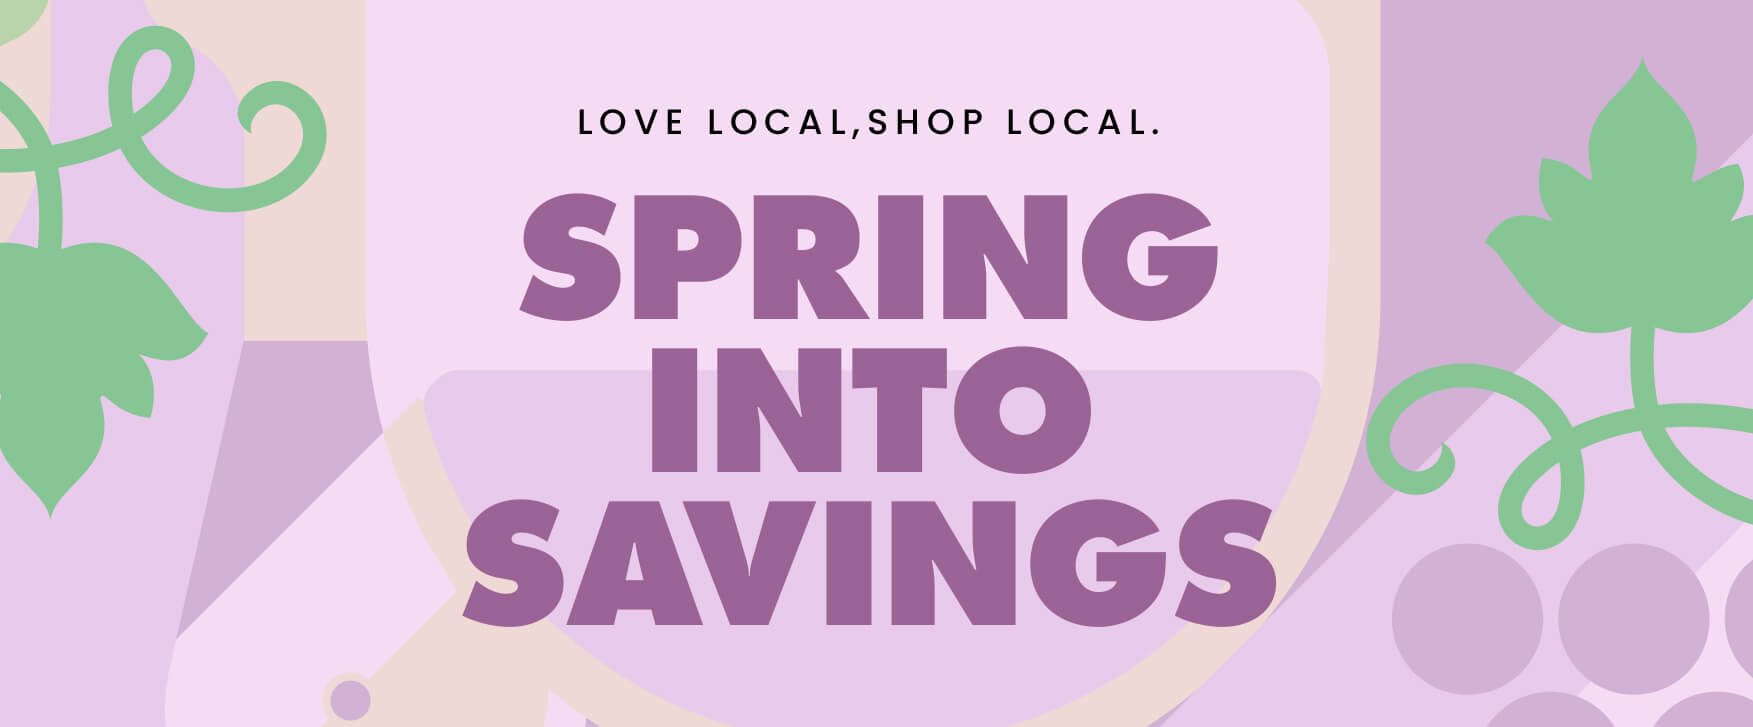 Love Local, Shop Local. Spring into Savings